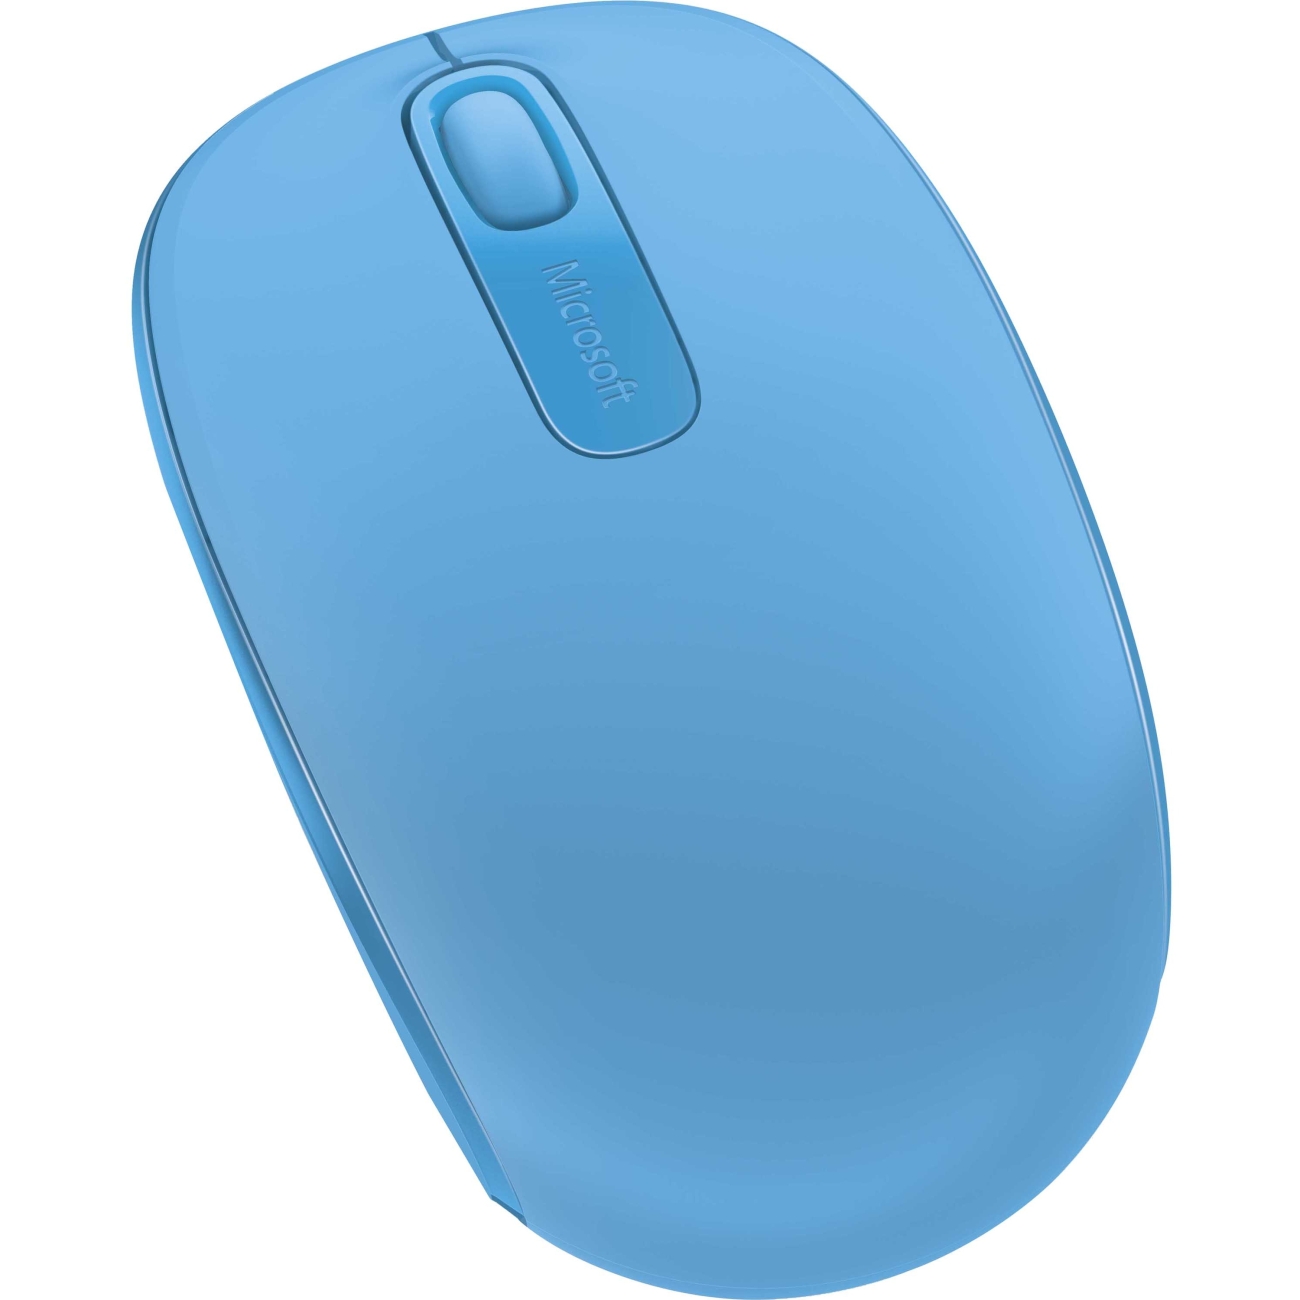 Mouse Microsoft Wireless Mobile 1850 Cyan